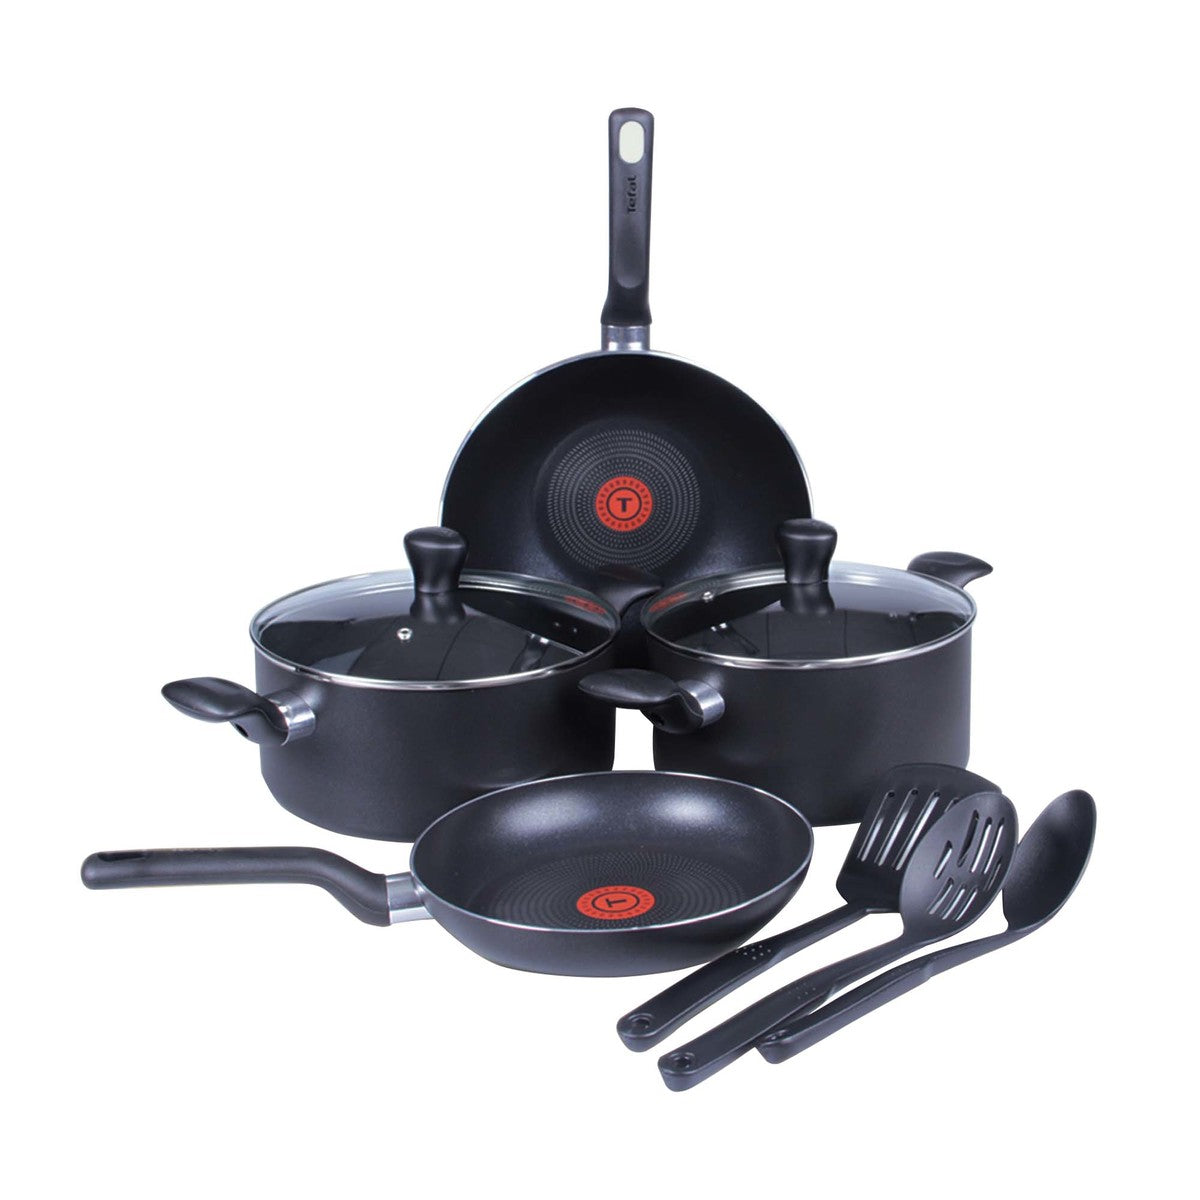 Tefal 9Pcs Super Cook Non-Stick Cookware Set Black Frypan B143S985